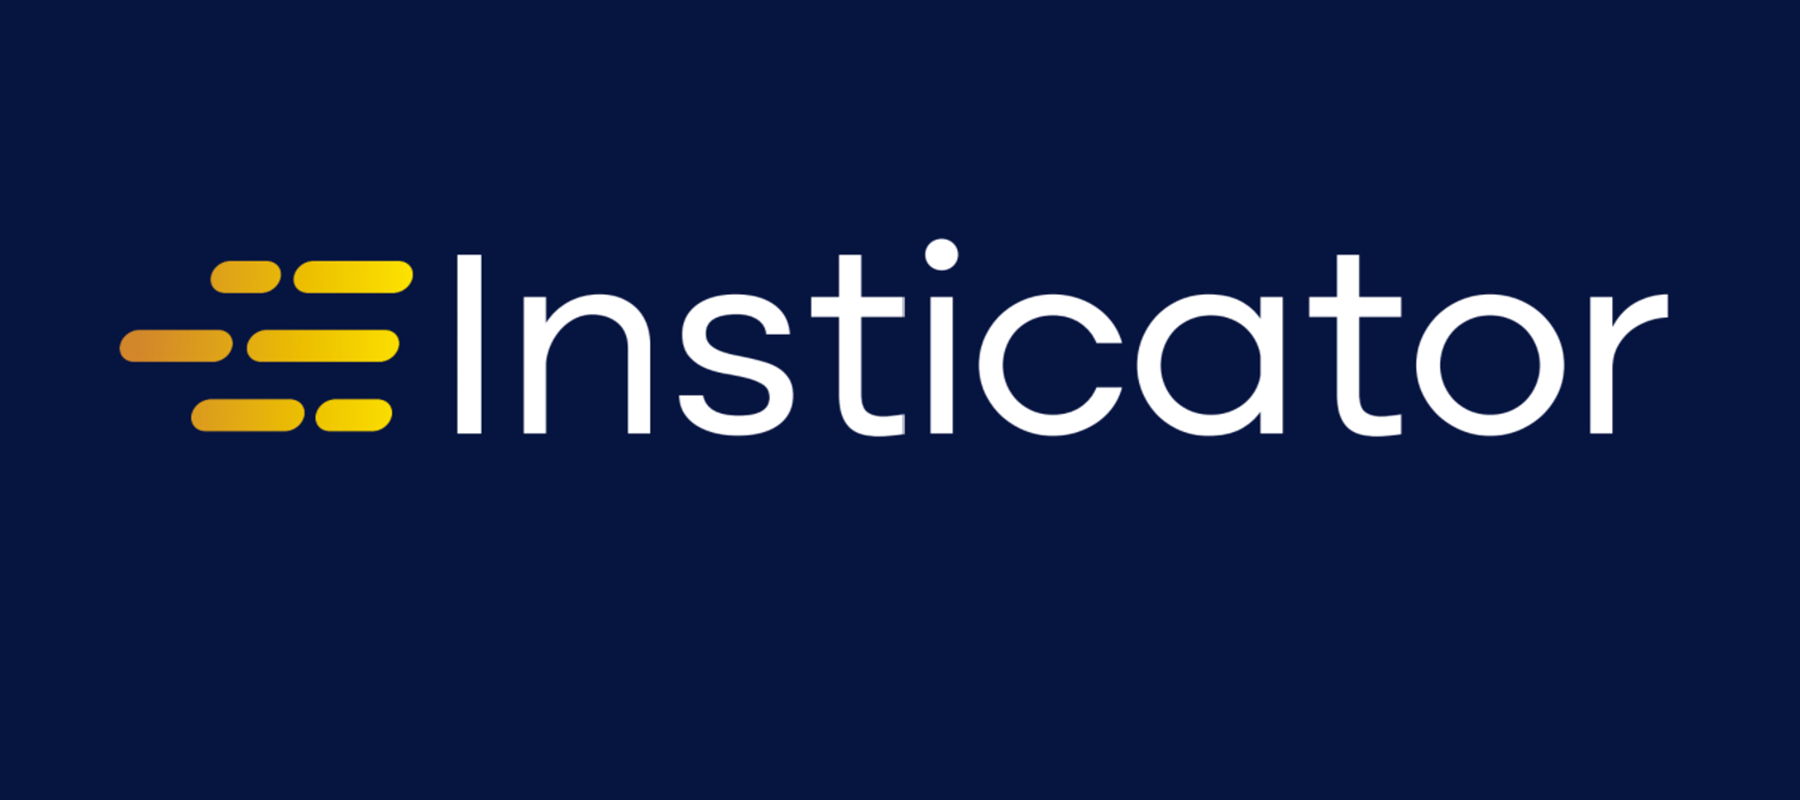 Insticator launches in Australia, expands CTV advertiser solutions through strategic acquisition